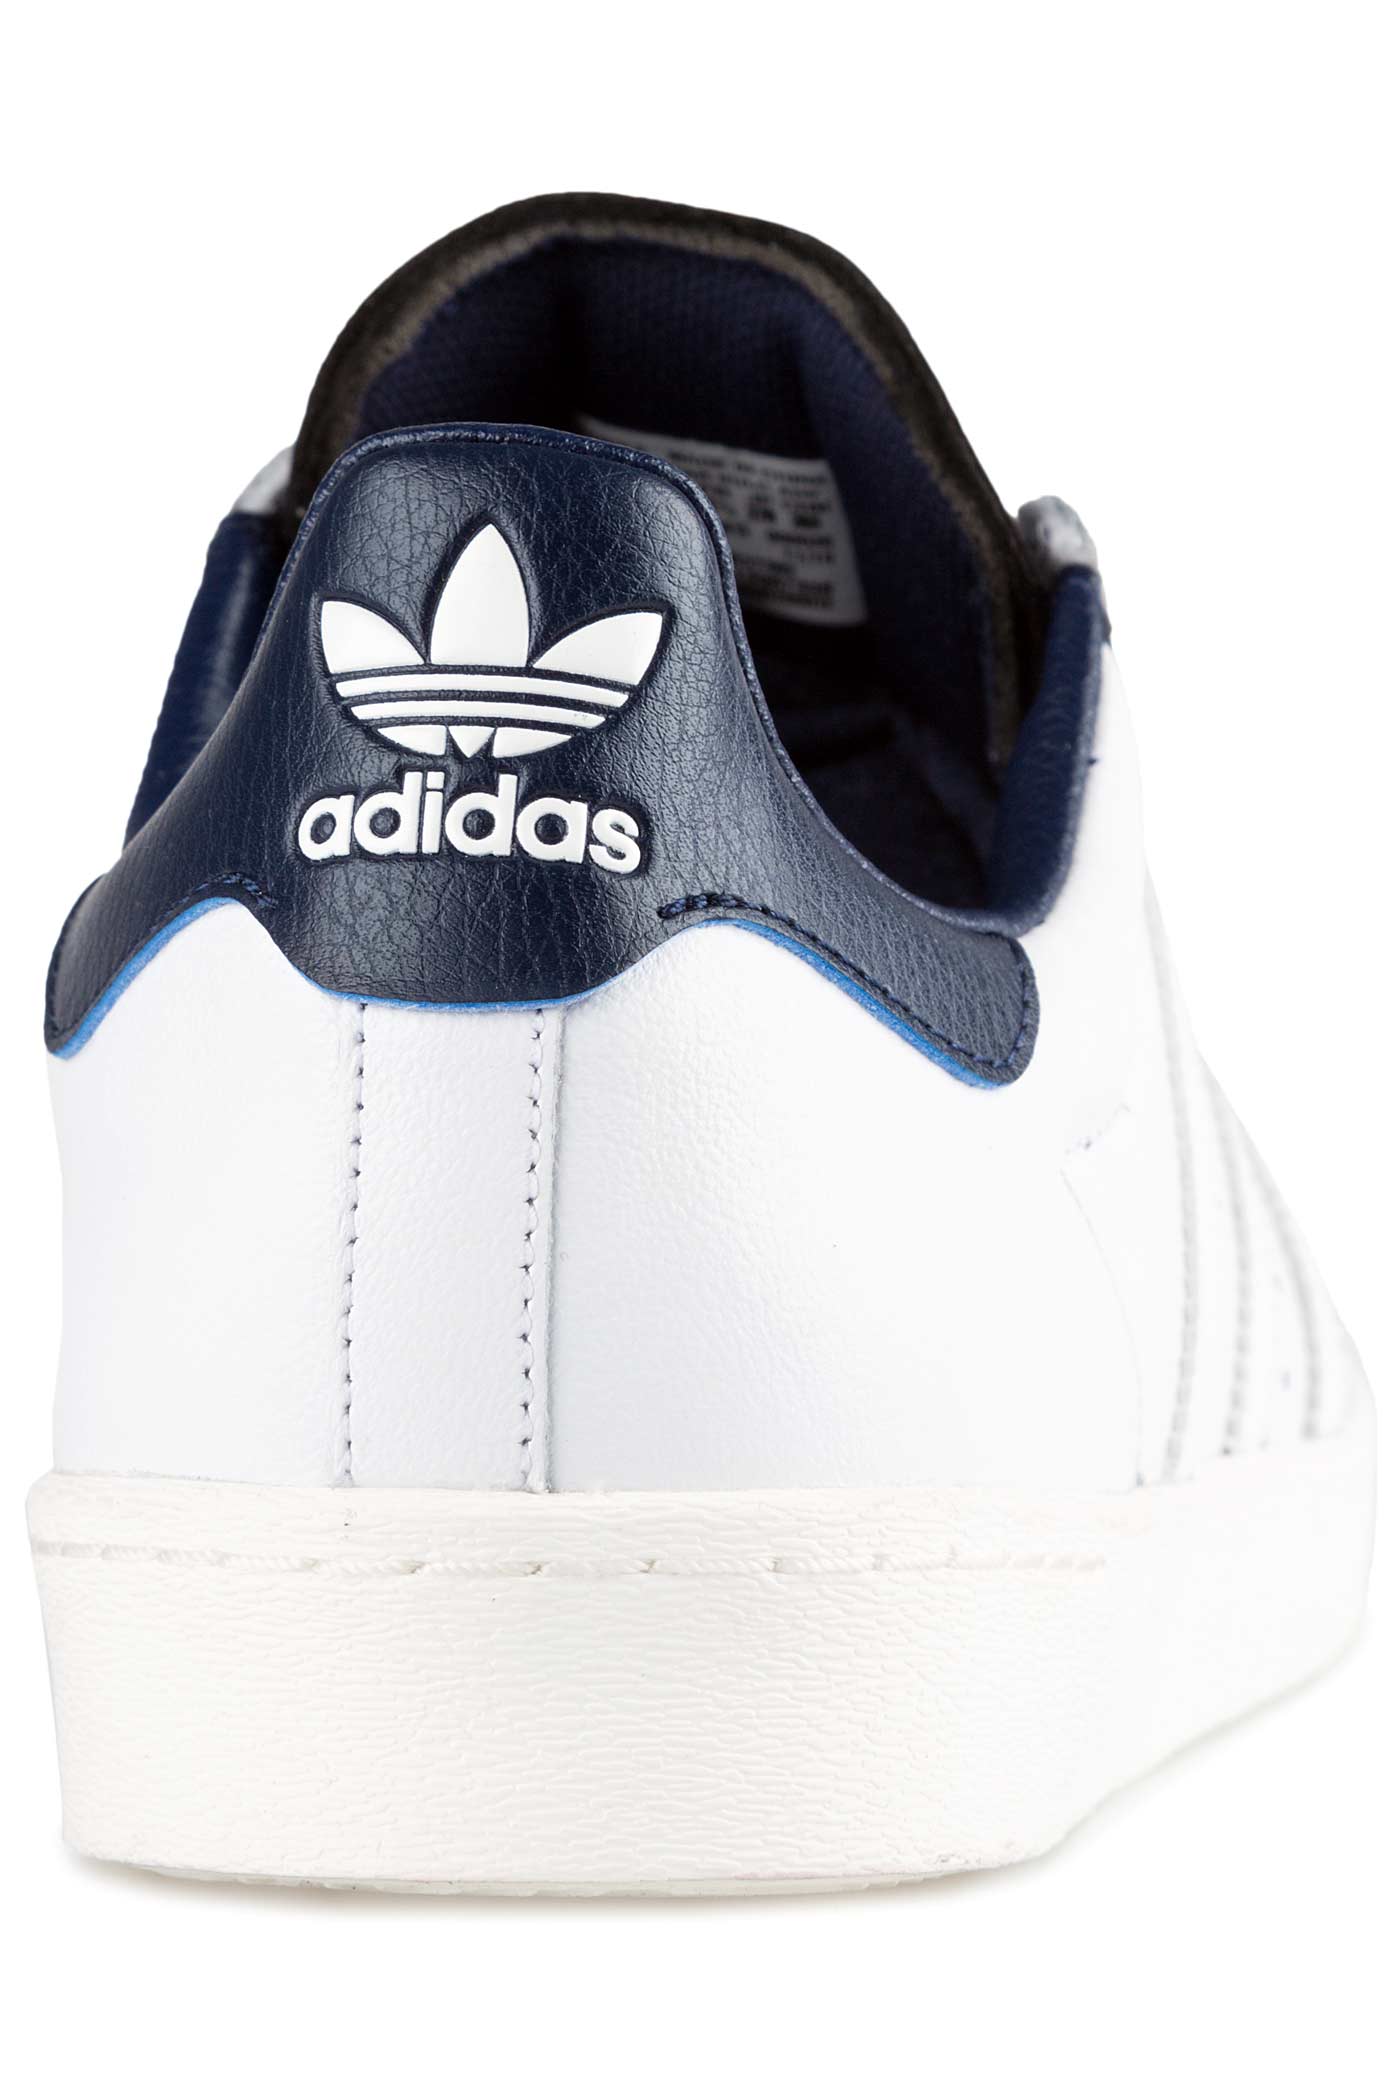 adidas Superstar Vulc ADV Shoes (white white navy) buy at skatedeluxe